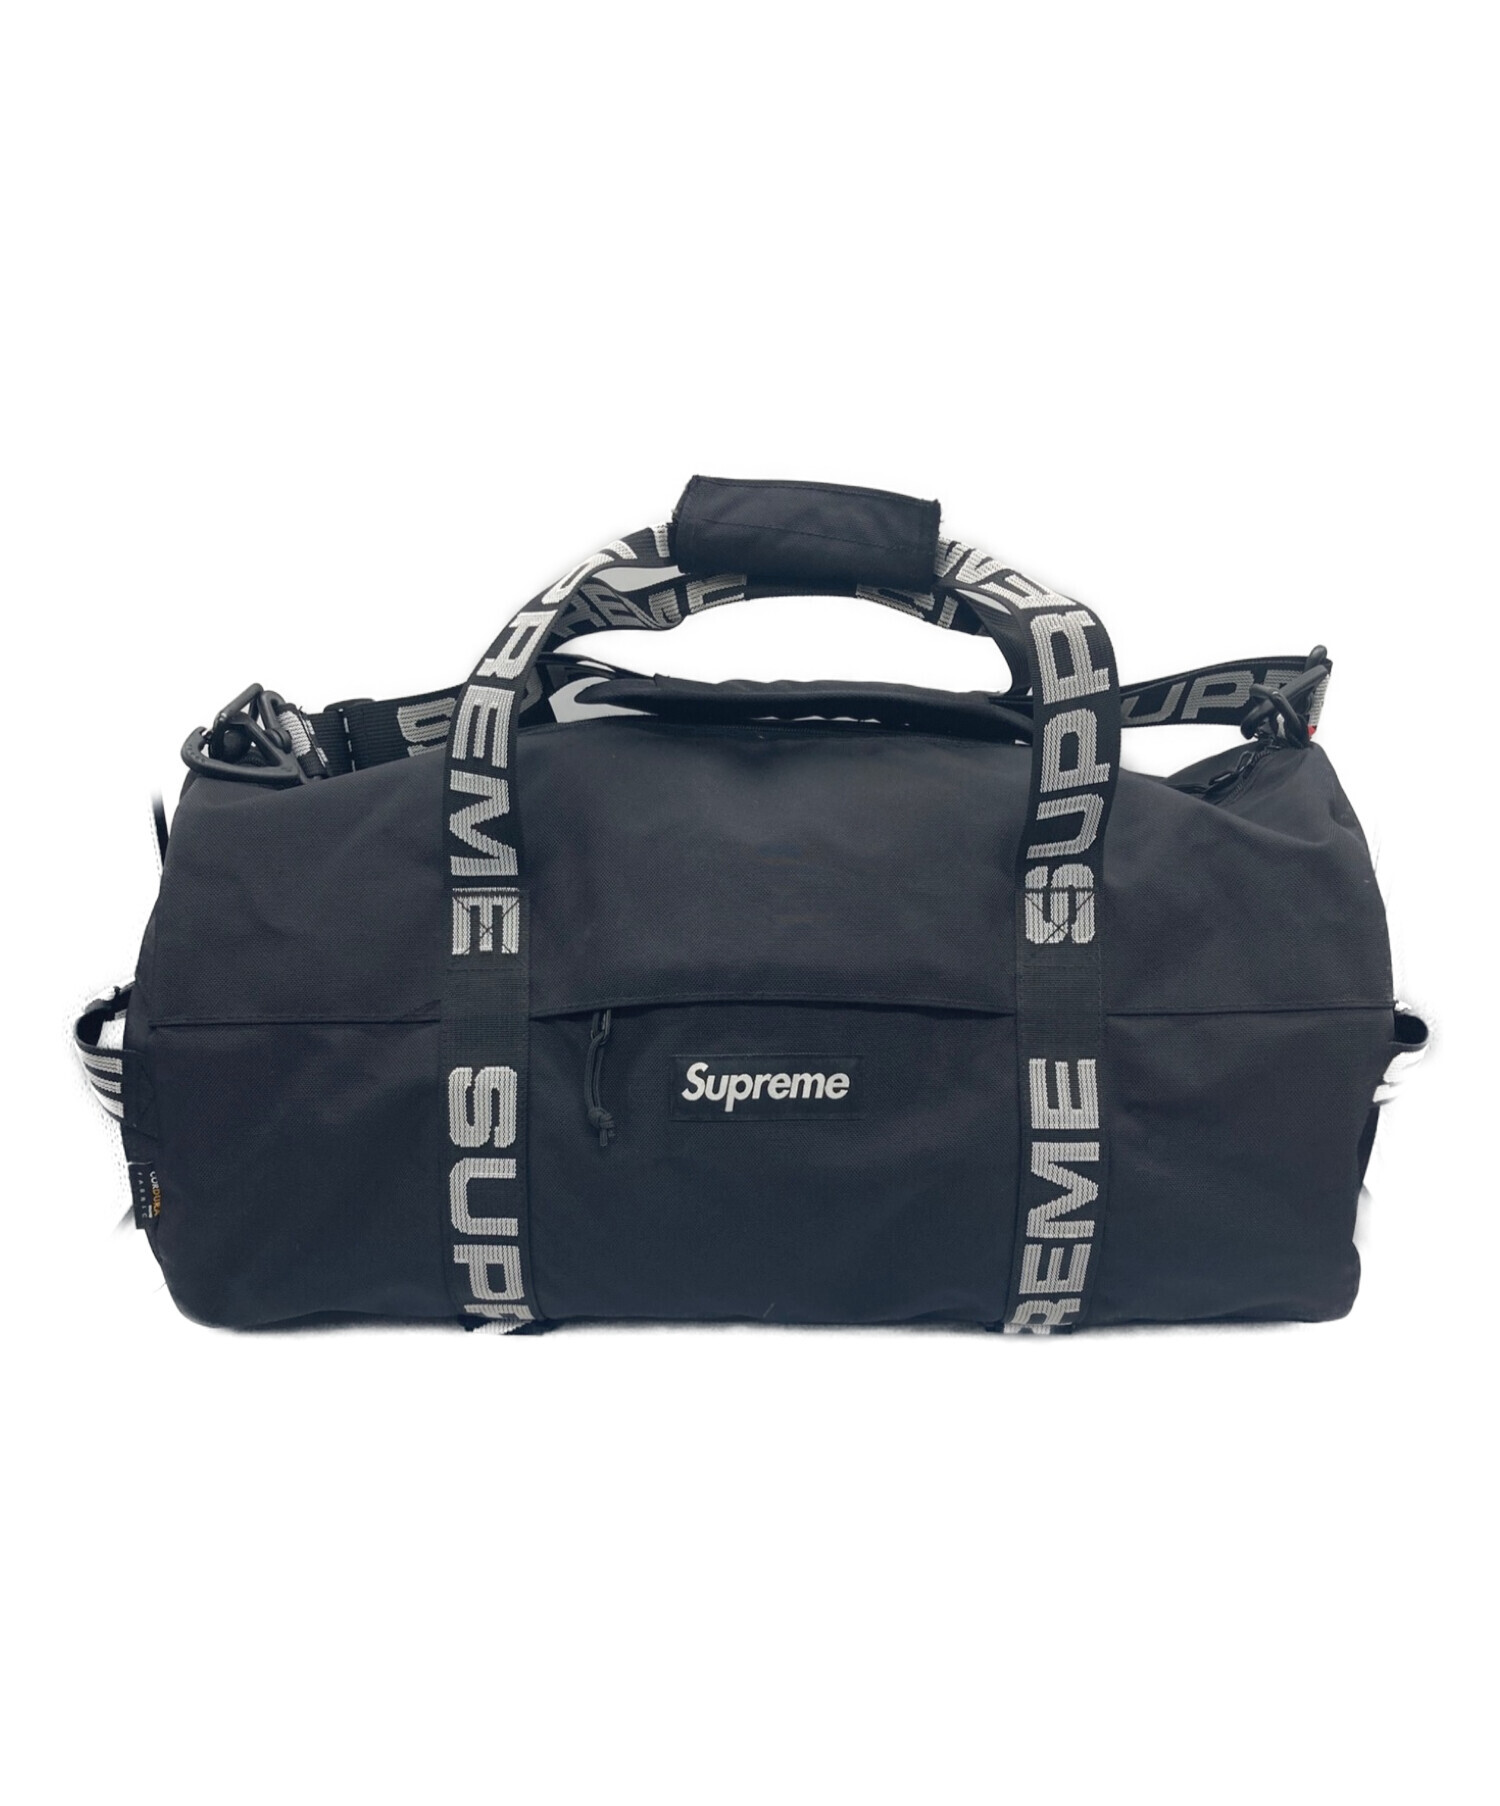 Supreme (シュプリーム) 18SS DUFFLE BAG/ボストンバッグ ブラック